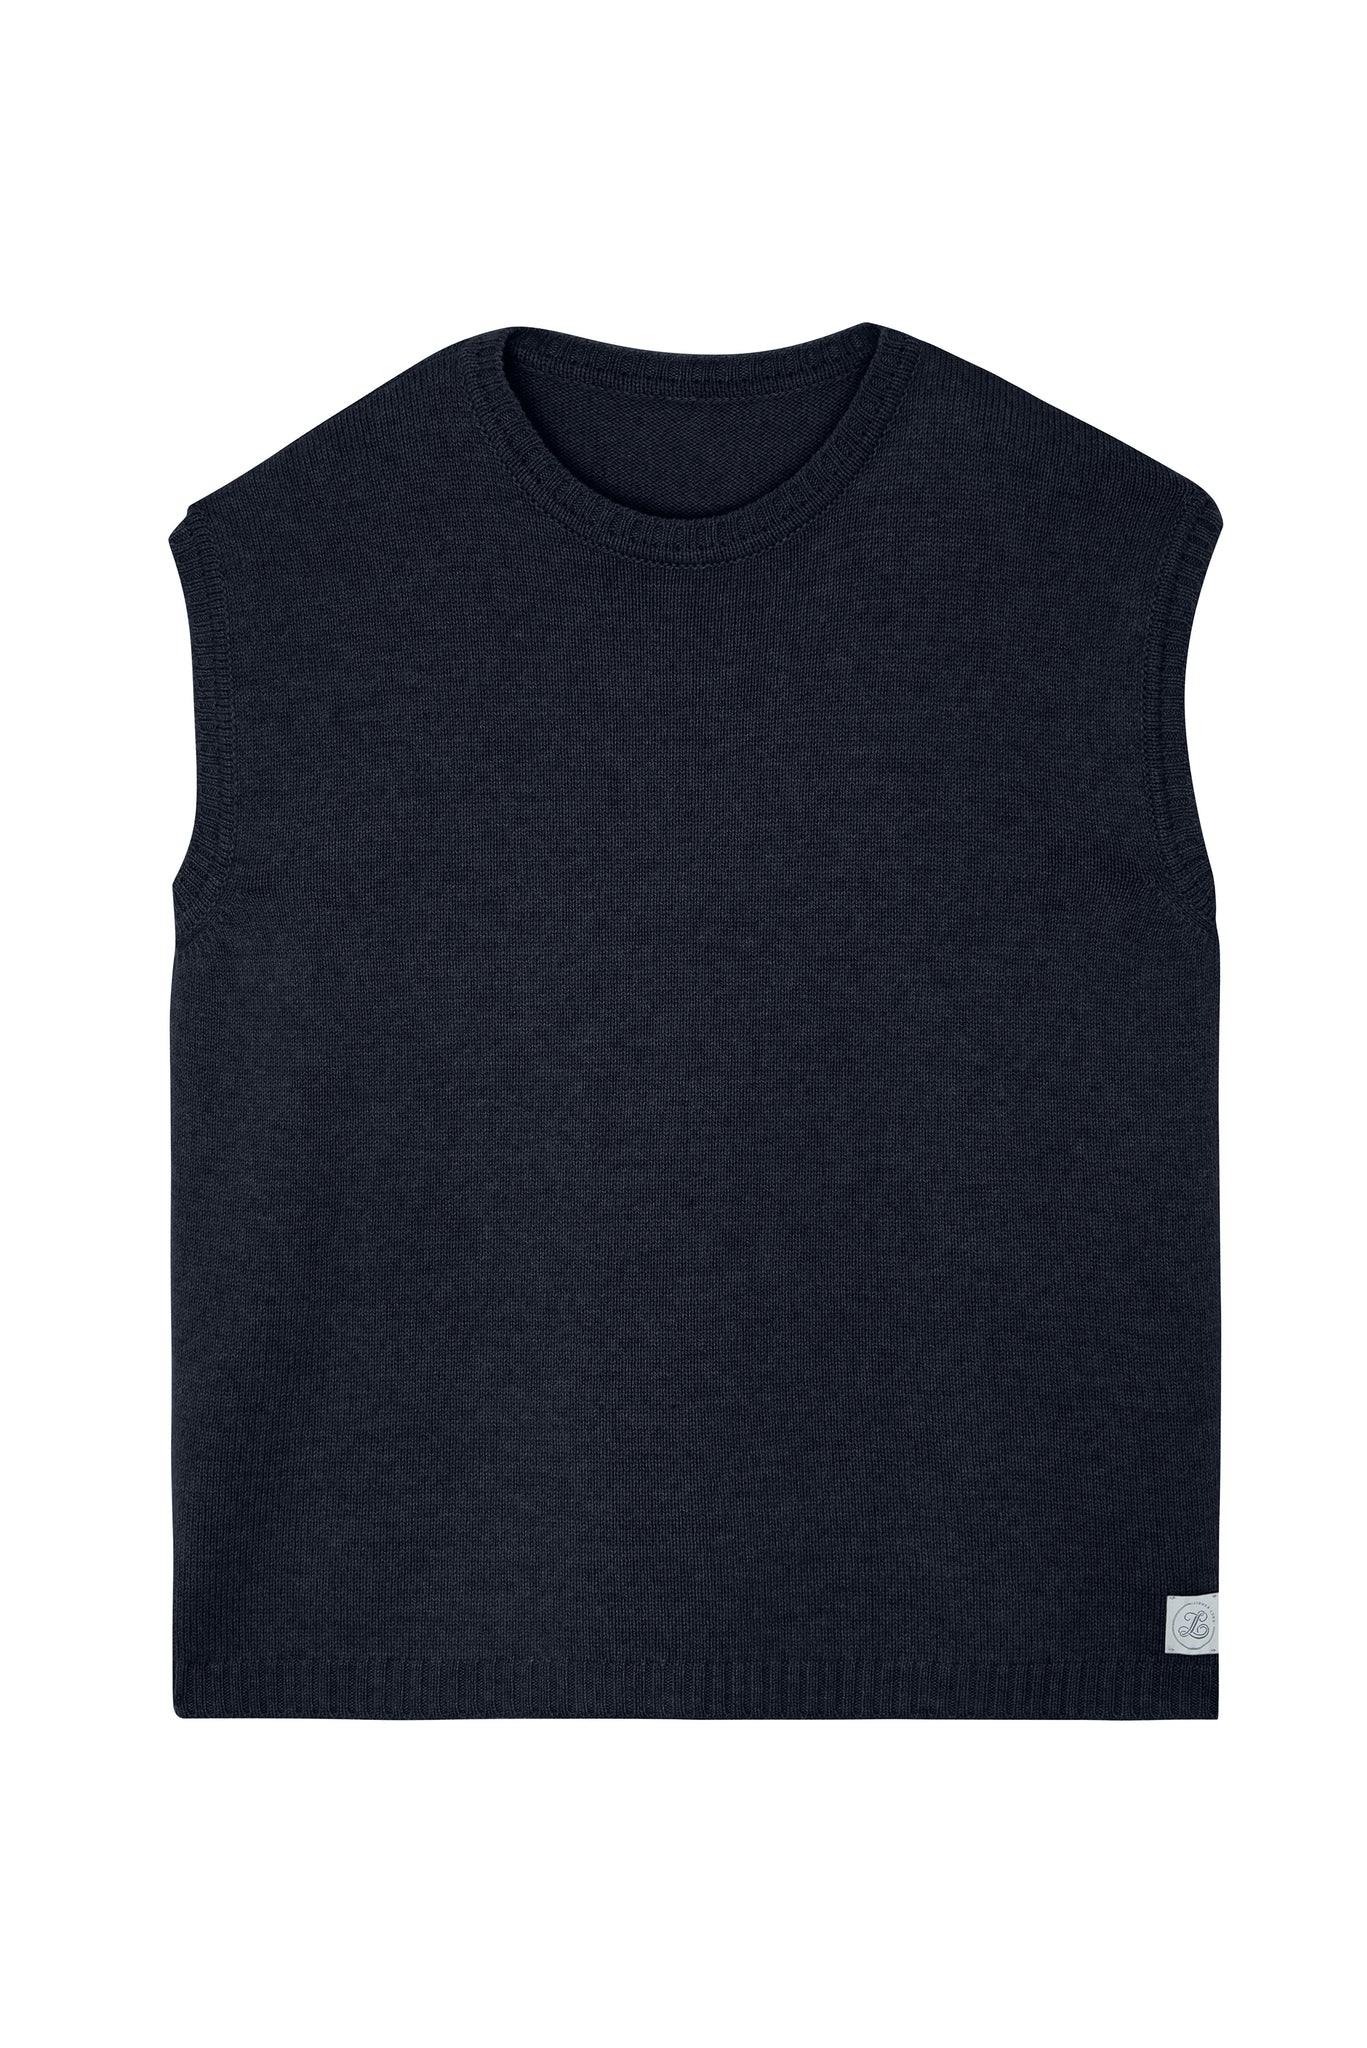 Dark navy sleeveless cashmere sweater for layering